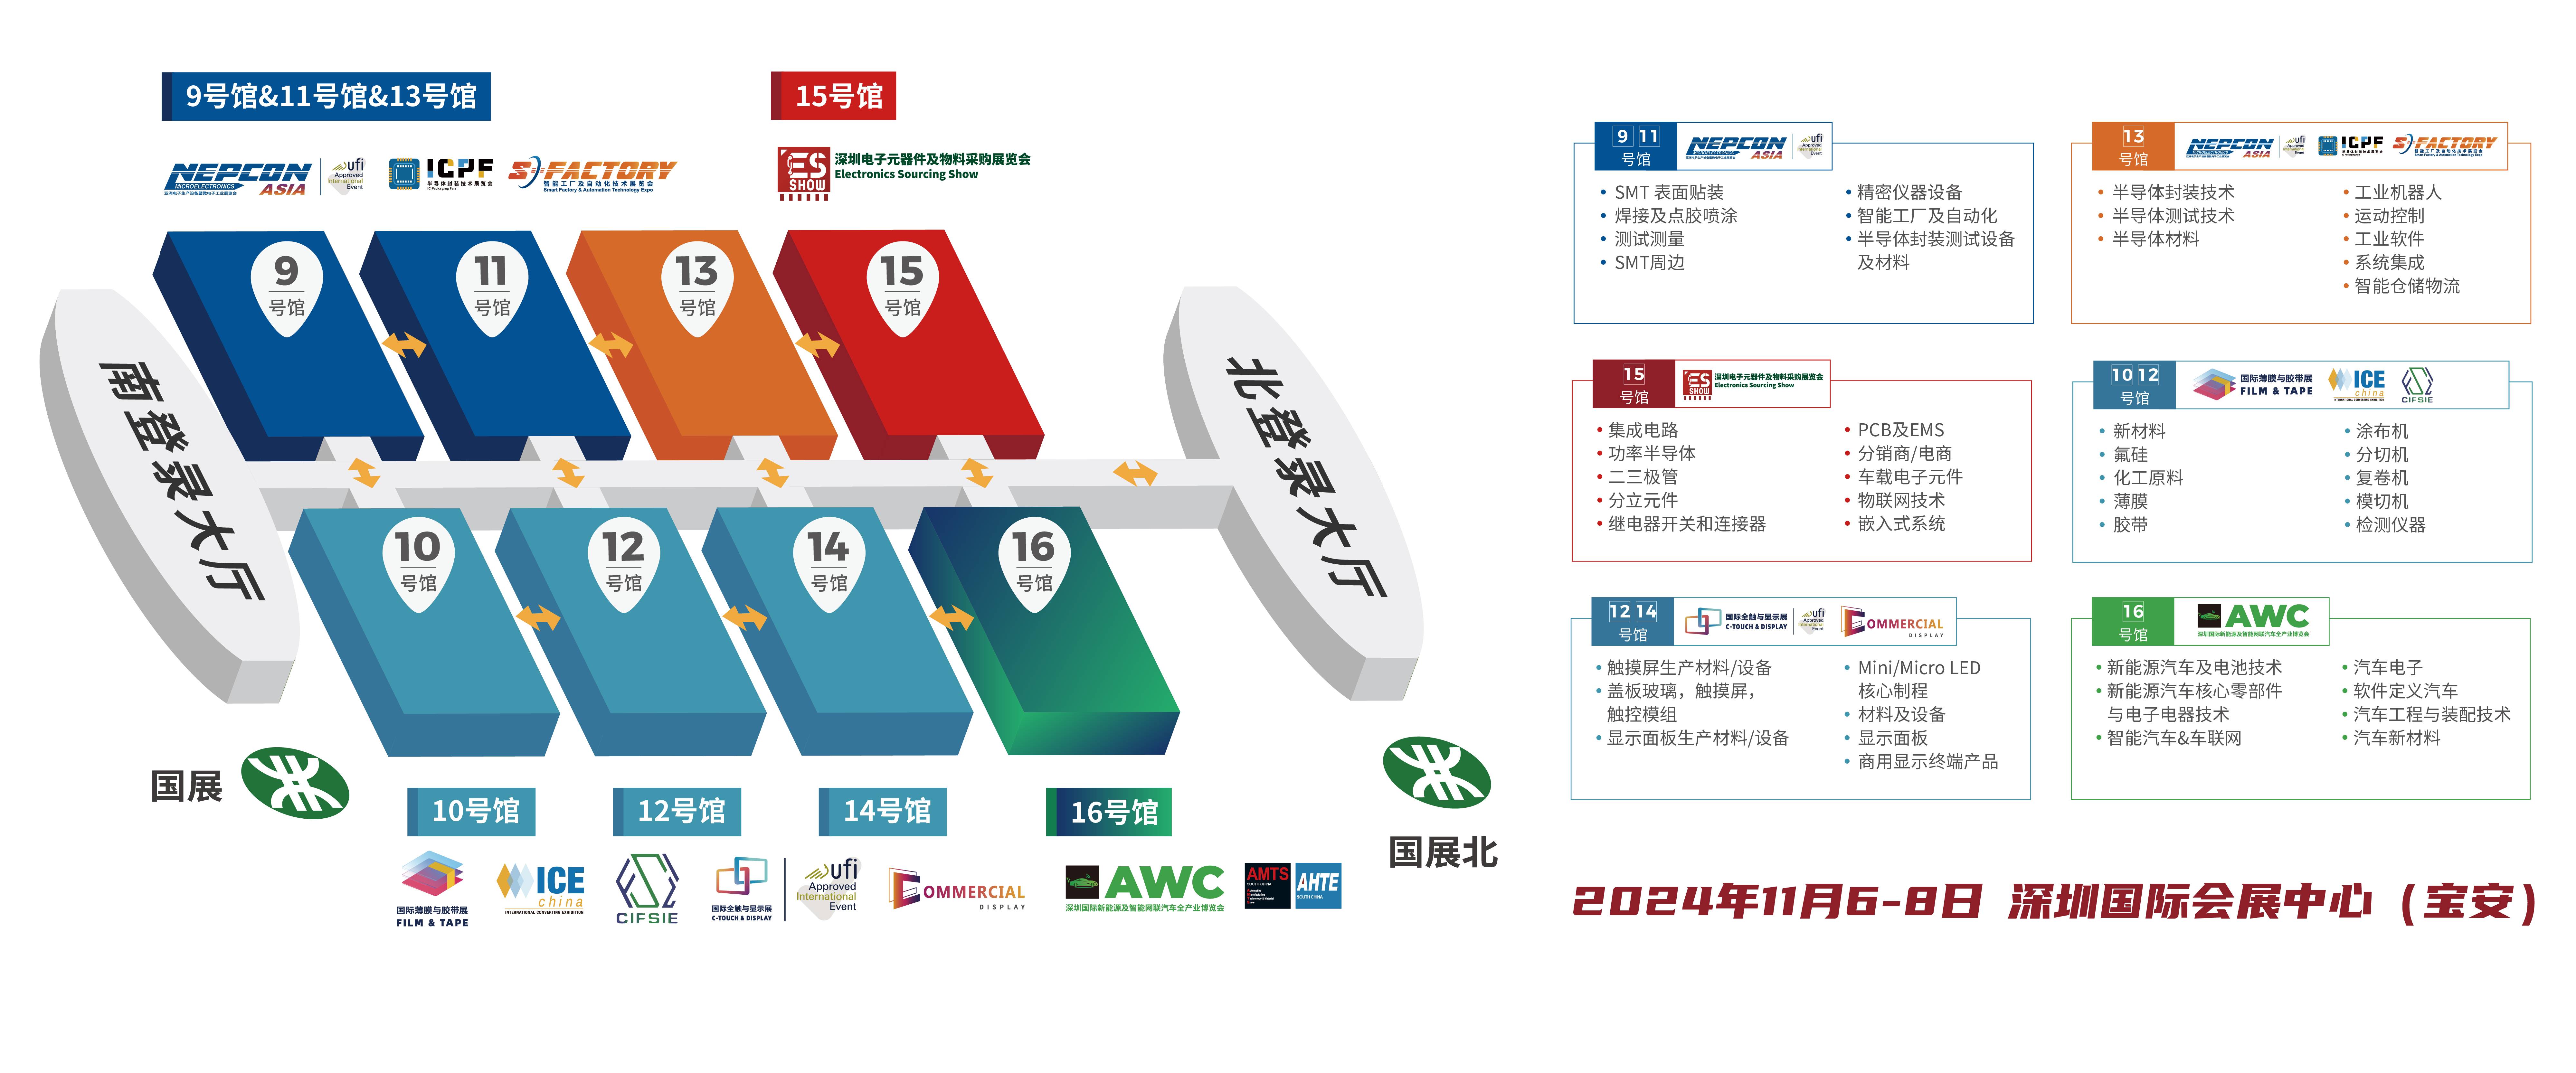 ESSHOW 深圳电子展 5G 通信 华南电子展 元器件展